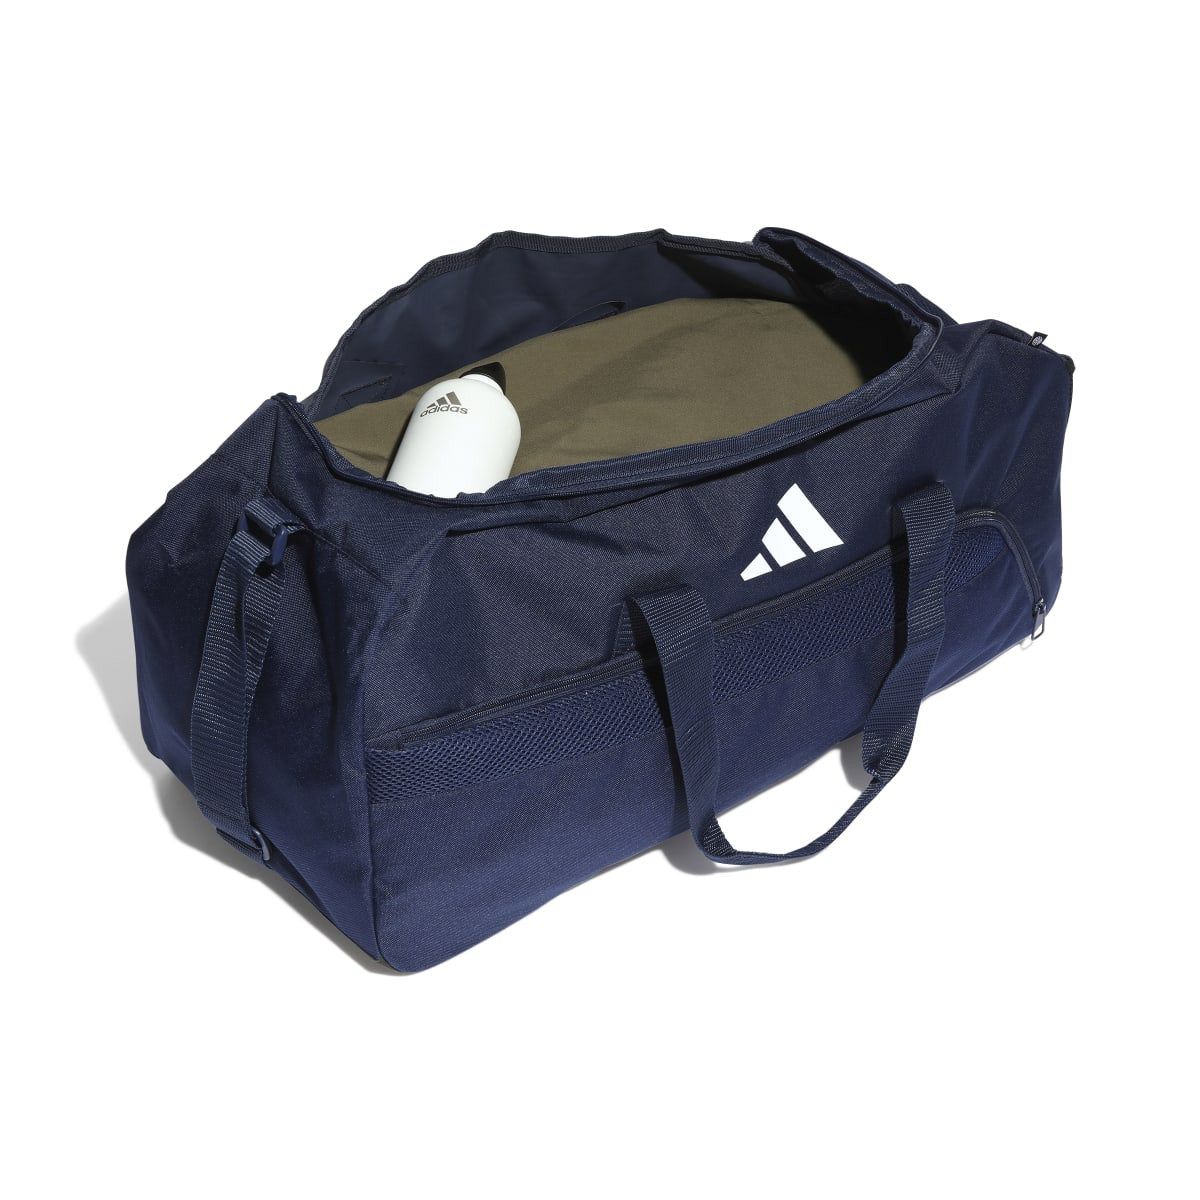 Adidas Tiro League Duffle Bag Large